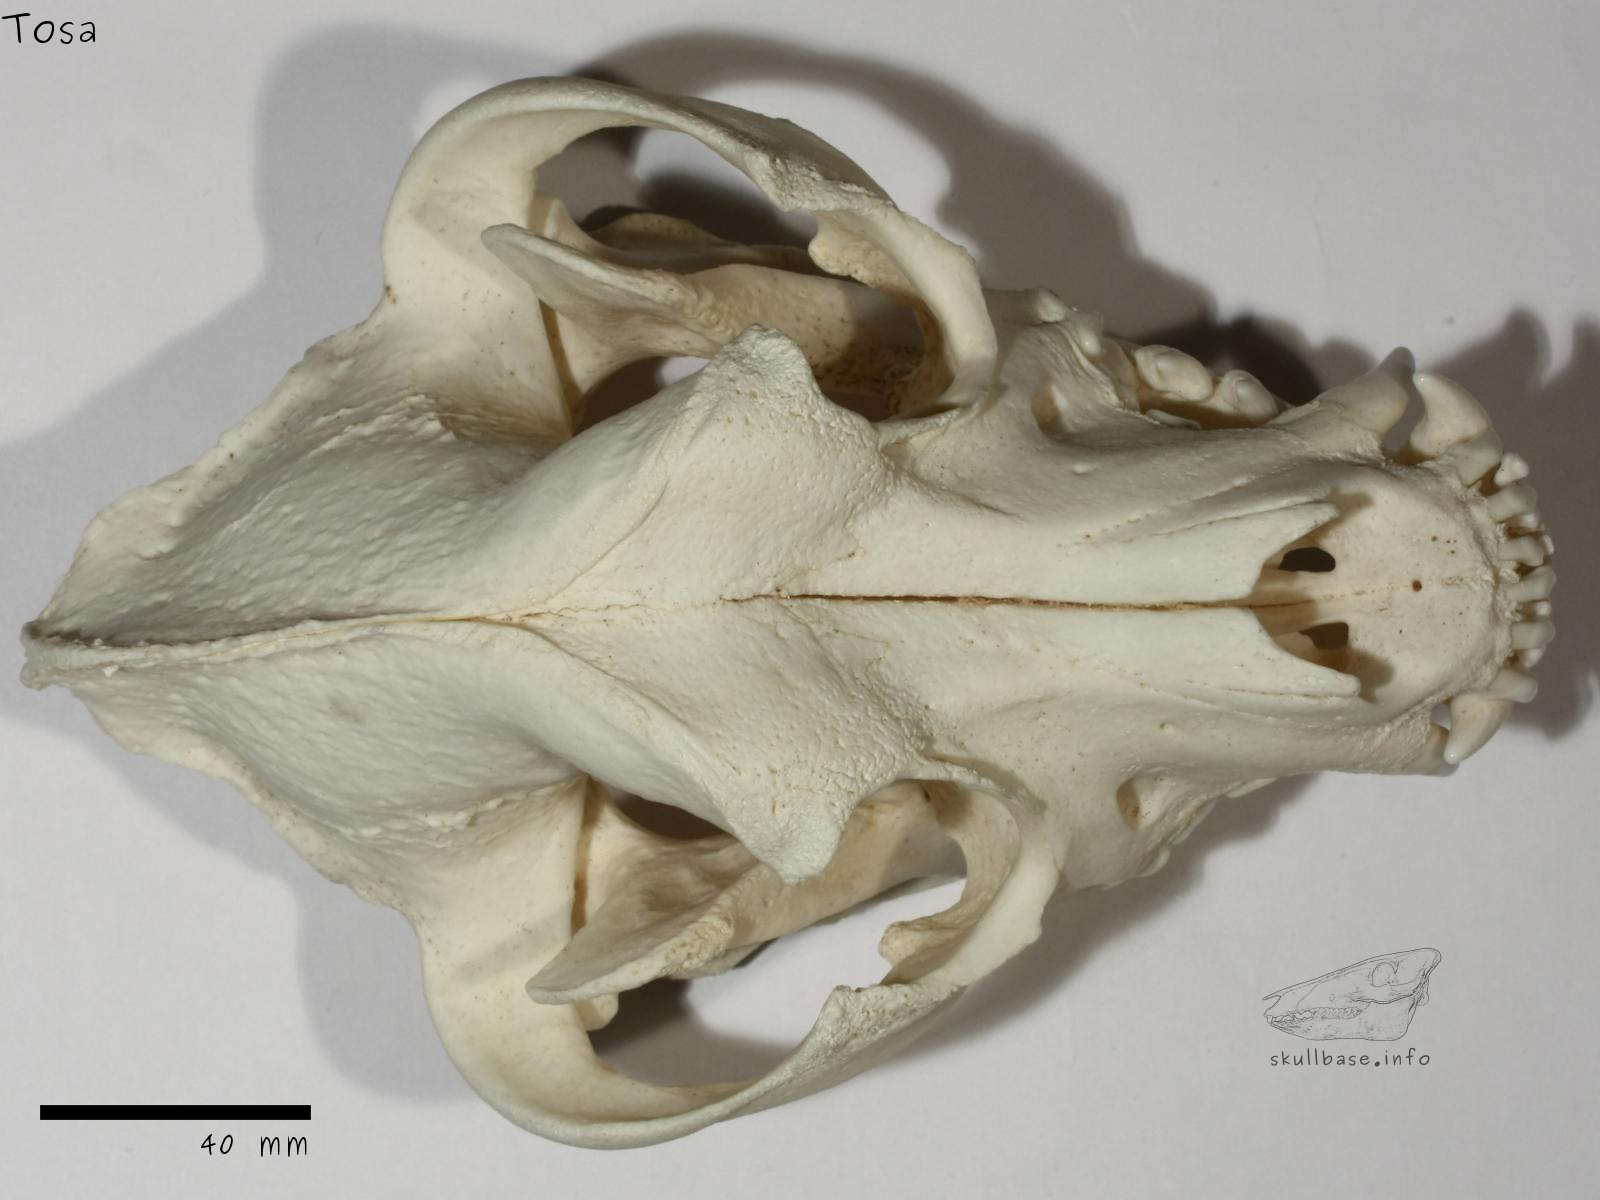 Tosa (Canis lupus familiaris) skull dorsal view